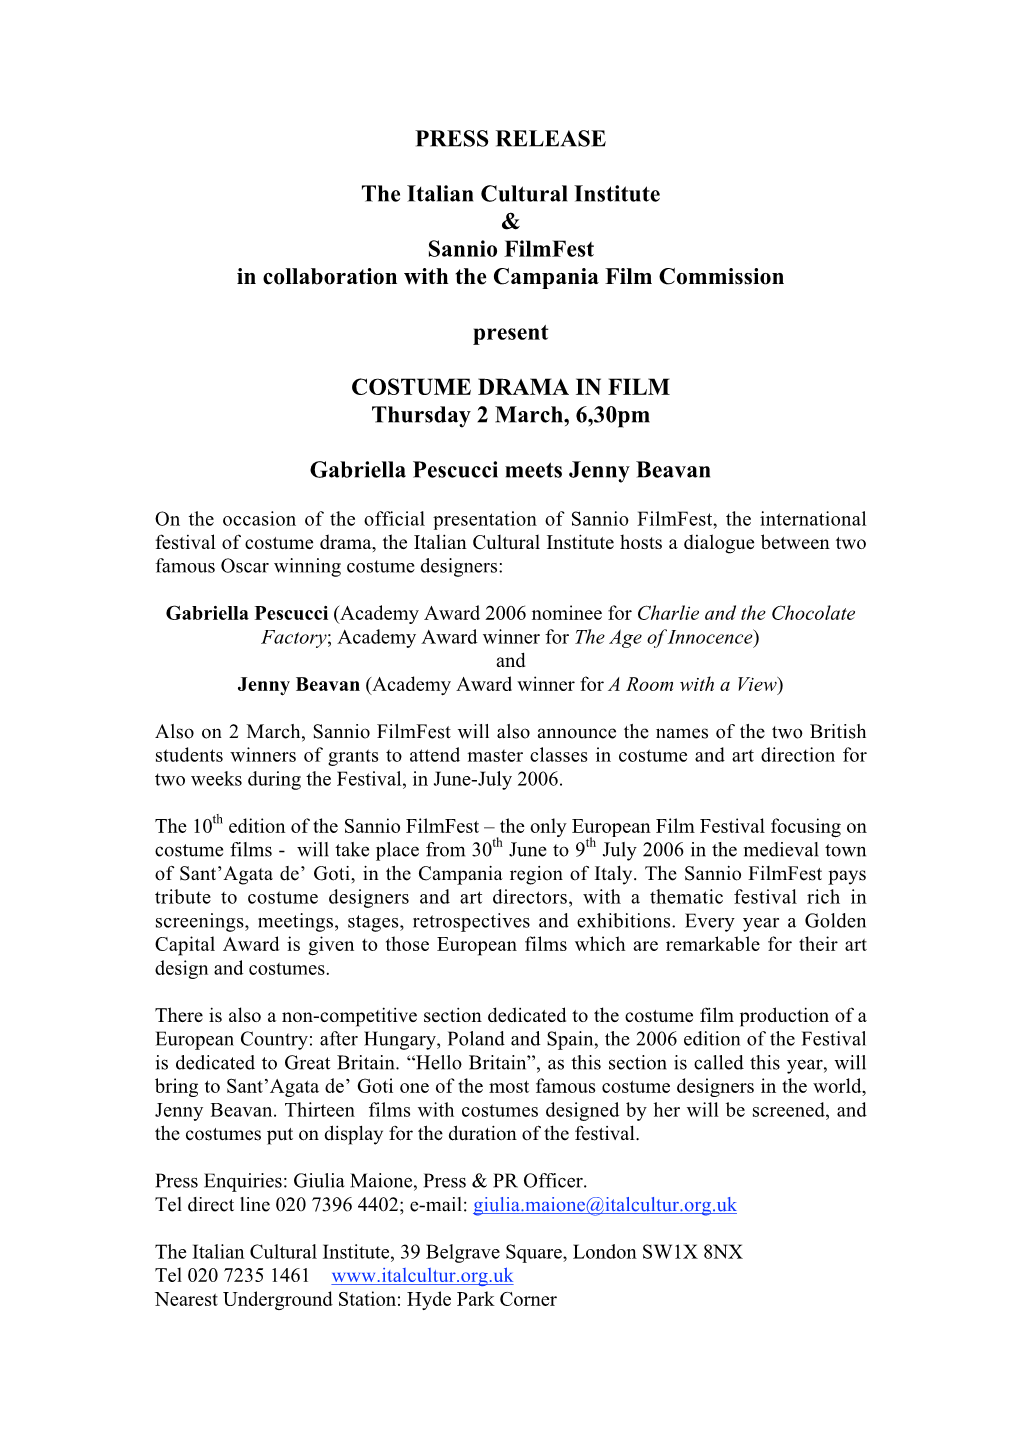 PRESS RELEASE the Italian Cultural Institute & Sannio Filmfest In